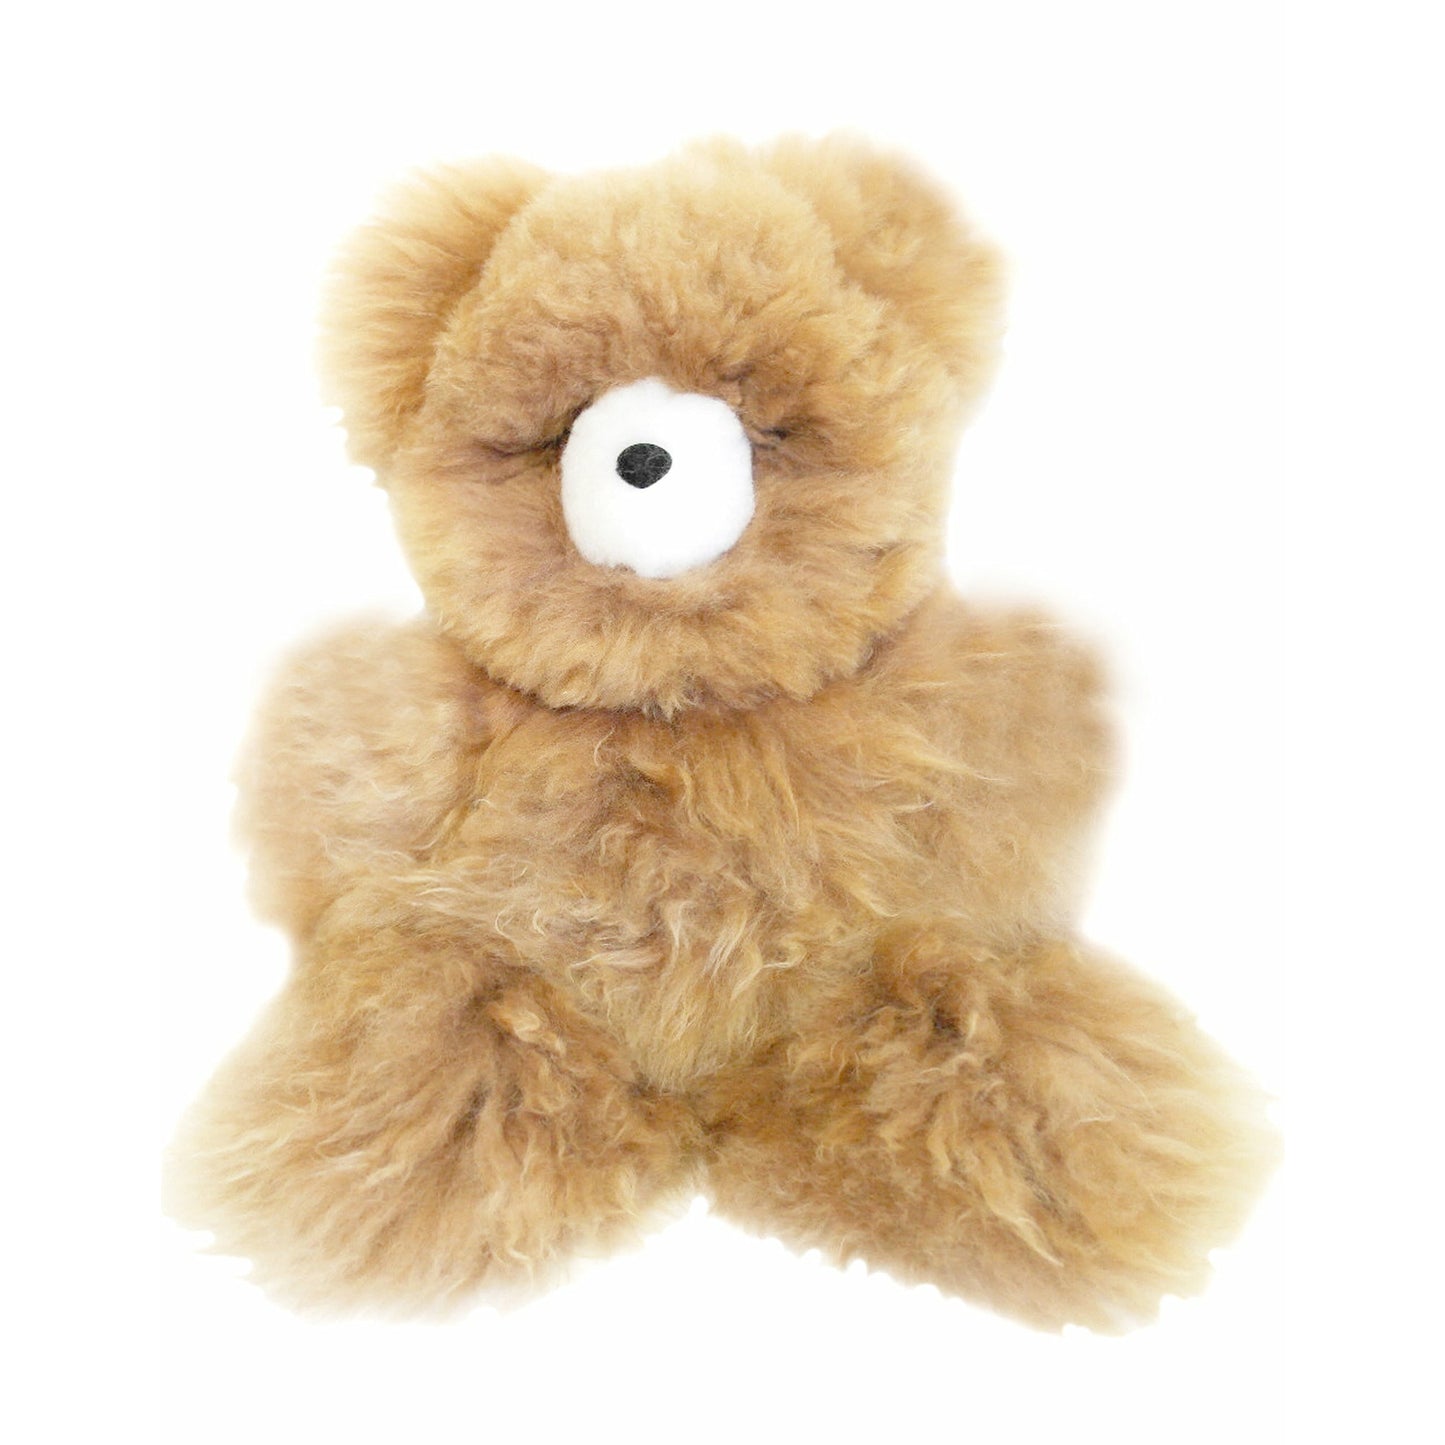 Alpaca Stuffed Animal - Bear - Large 21"